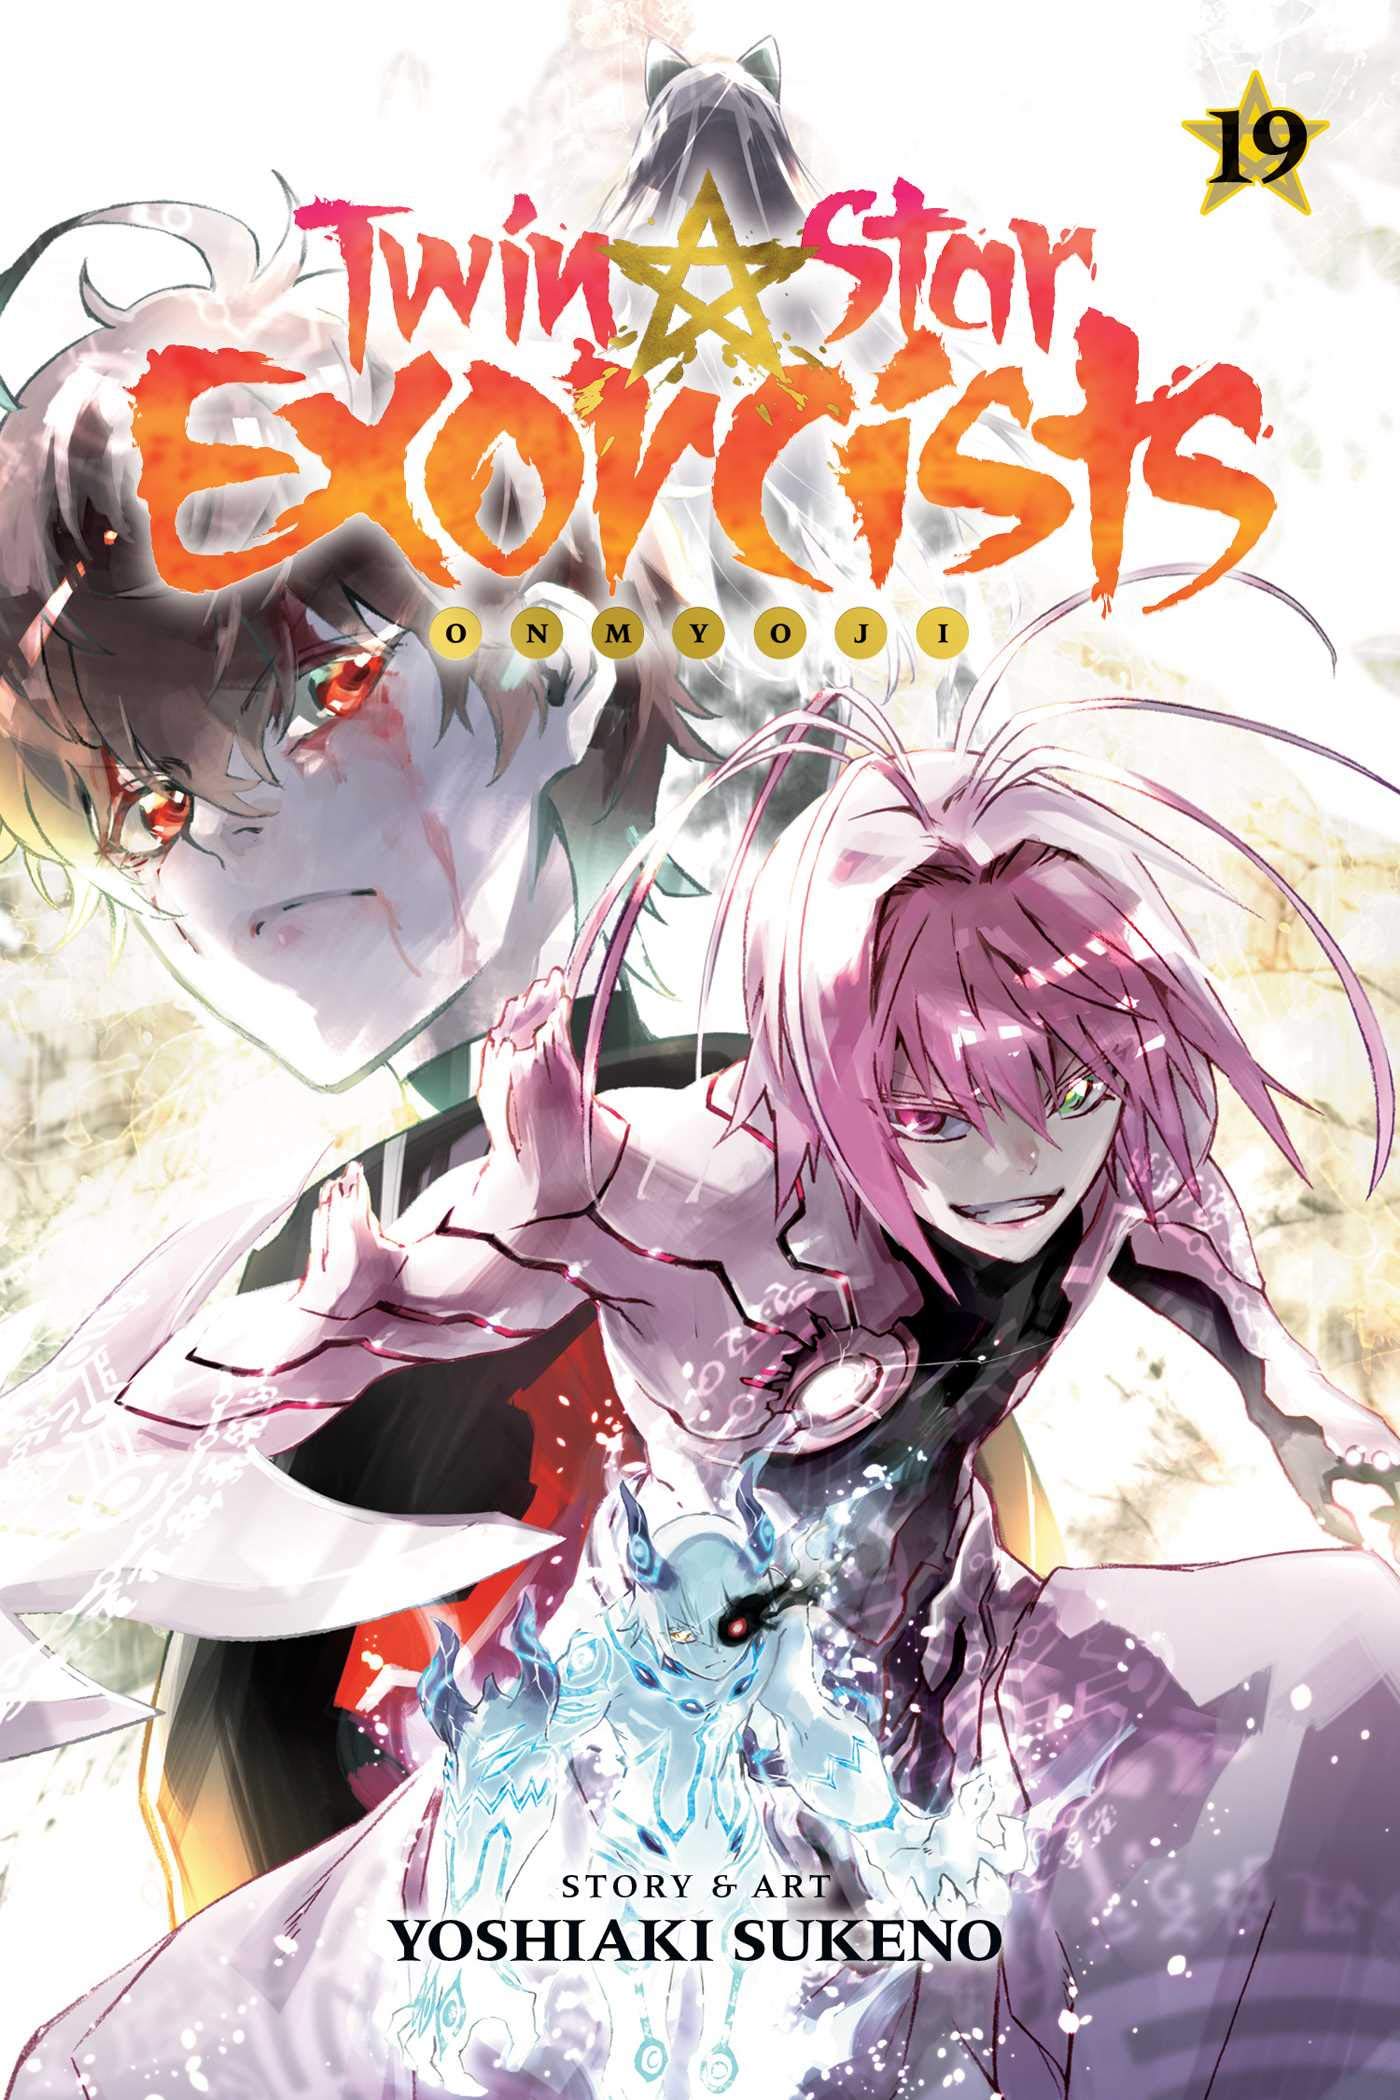 Twin Star Exorcists: Onmyoji -  Volume 19